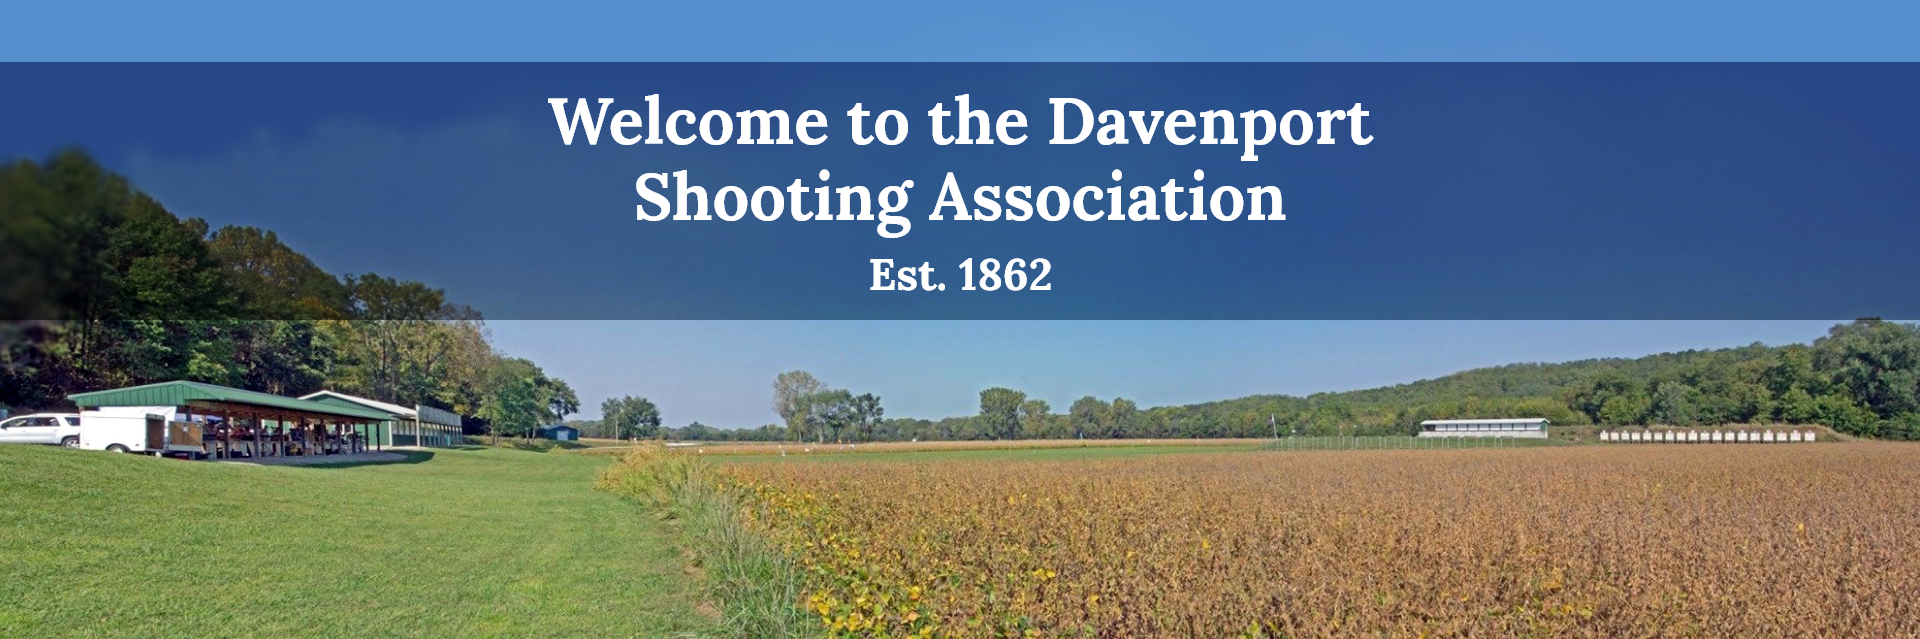 Photo of the Davenport Shooting Association firing range